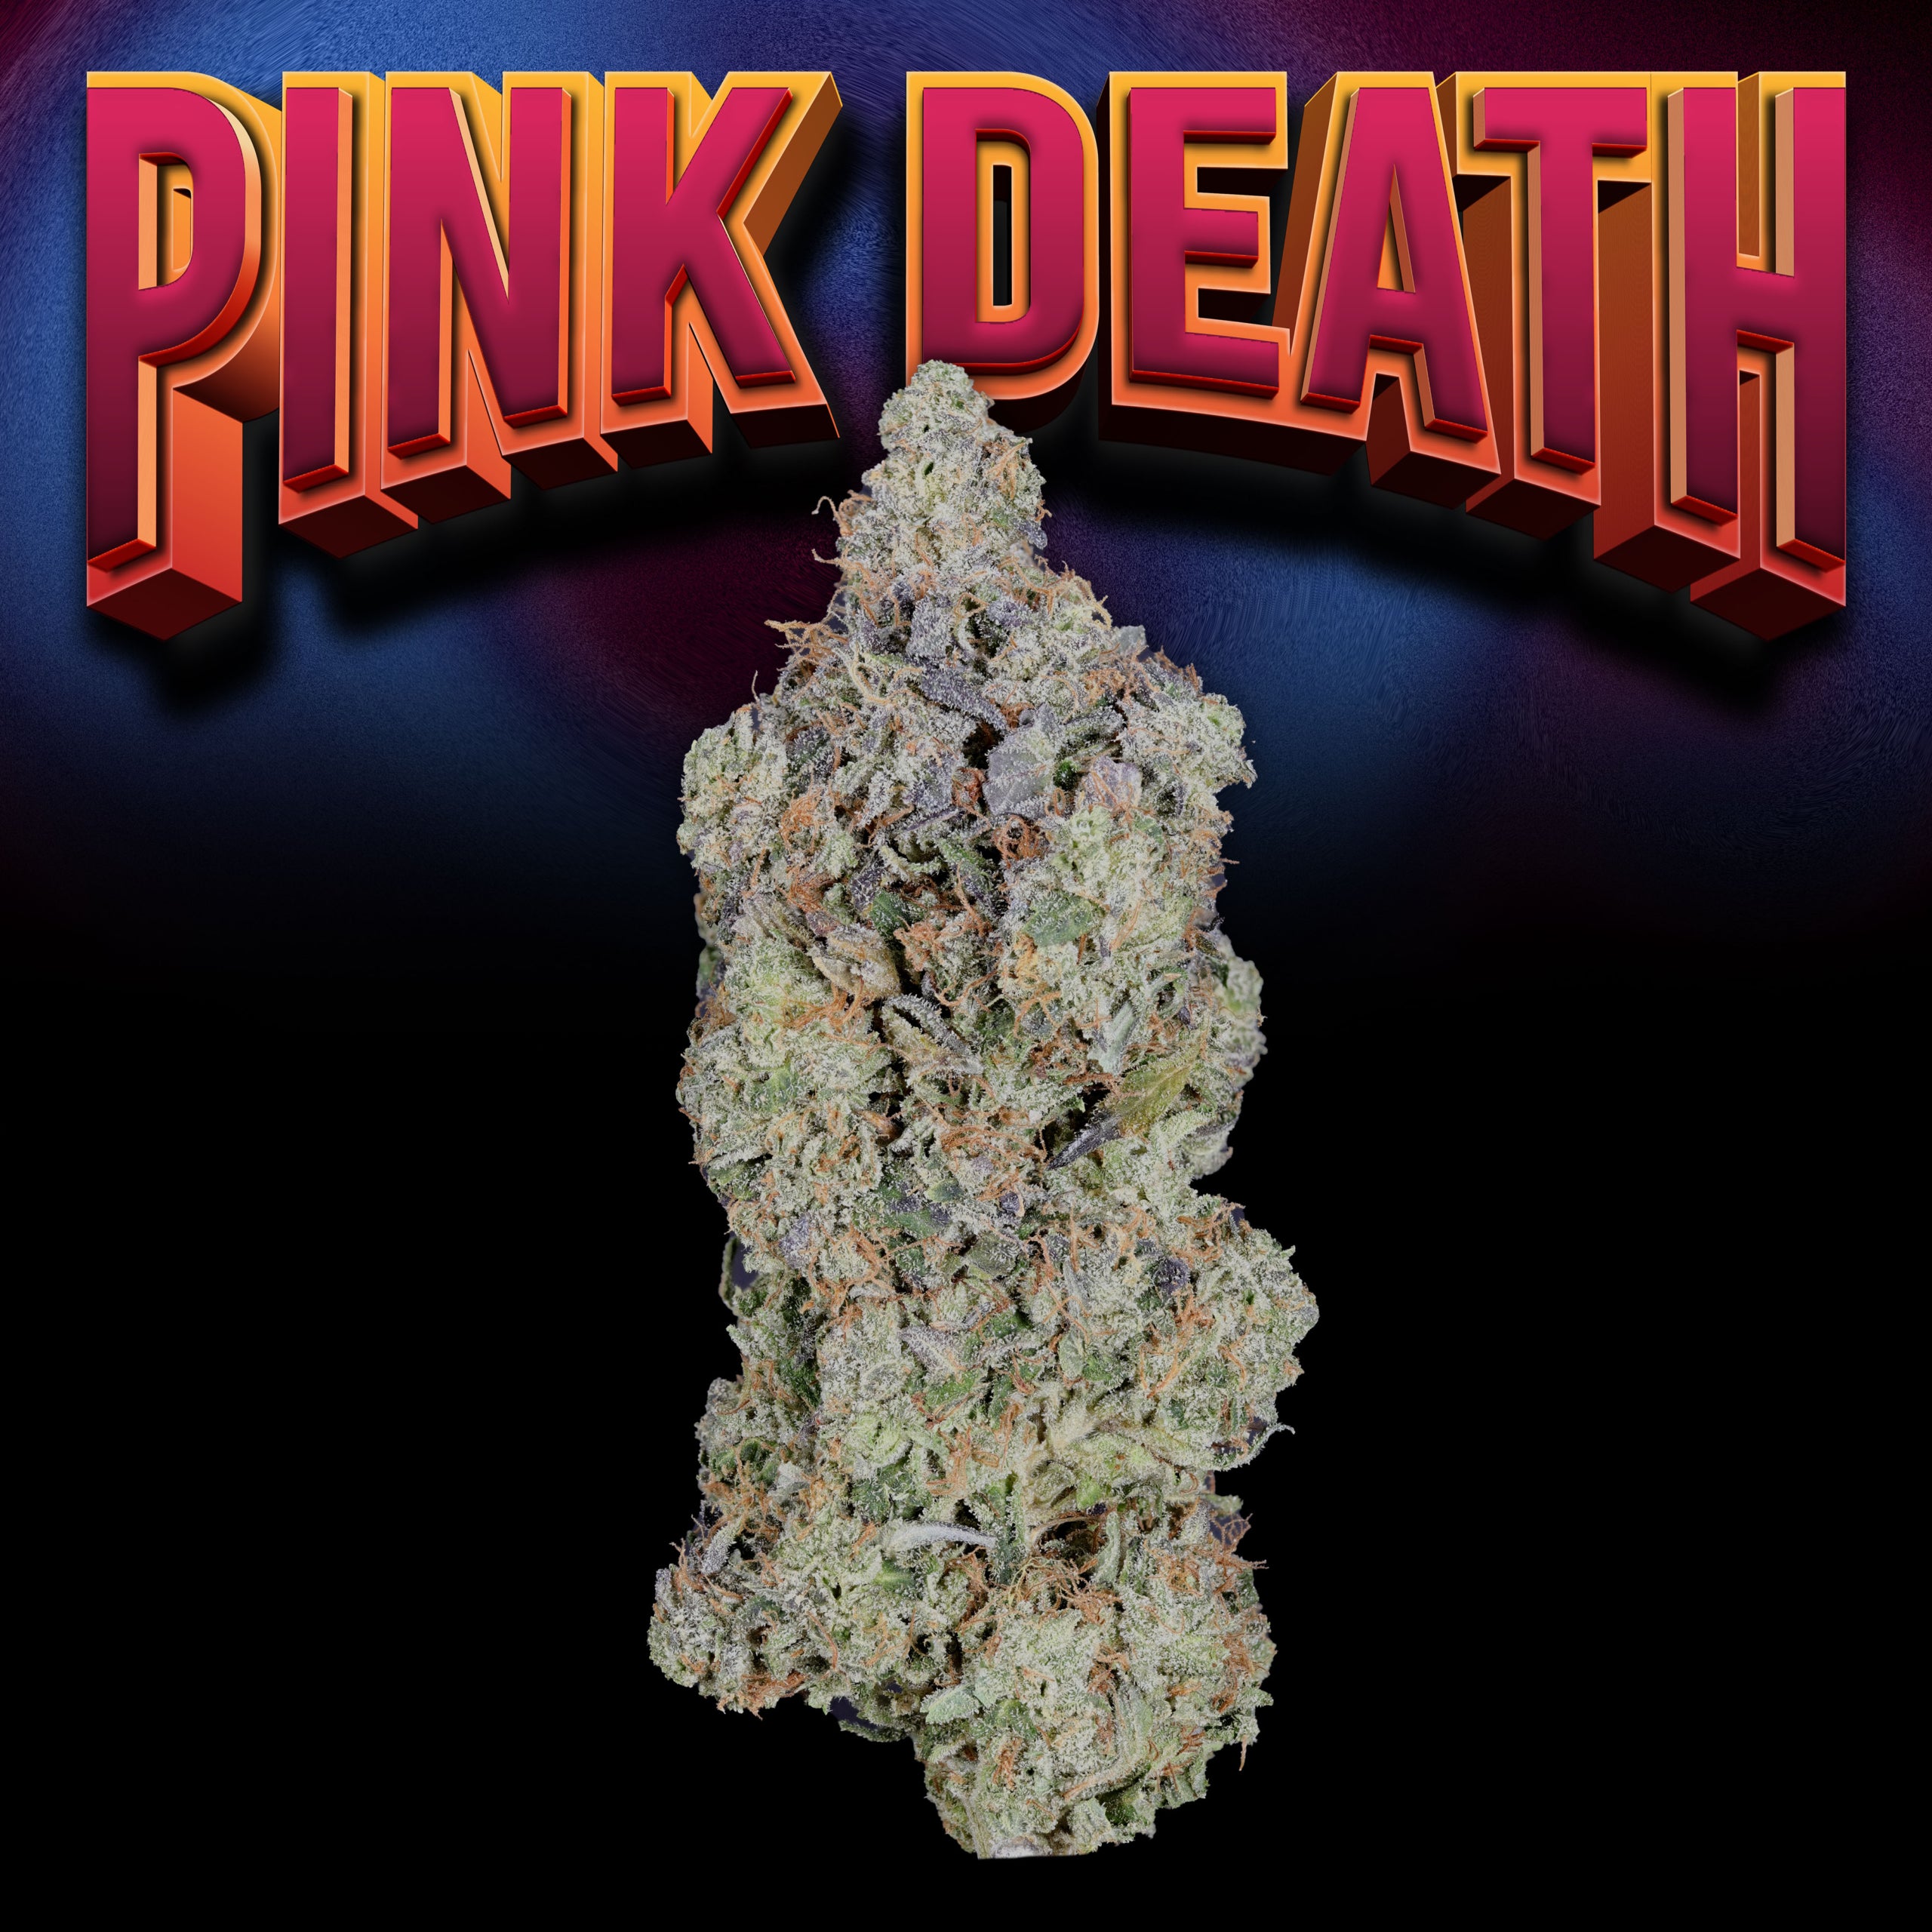 Pink Death Bud Pic